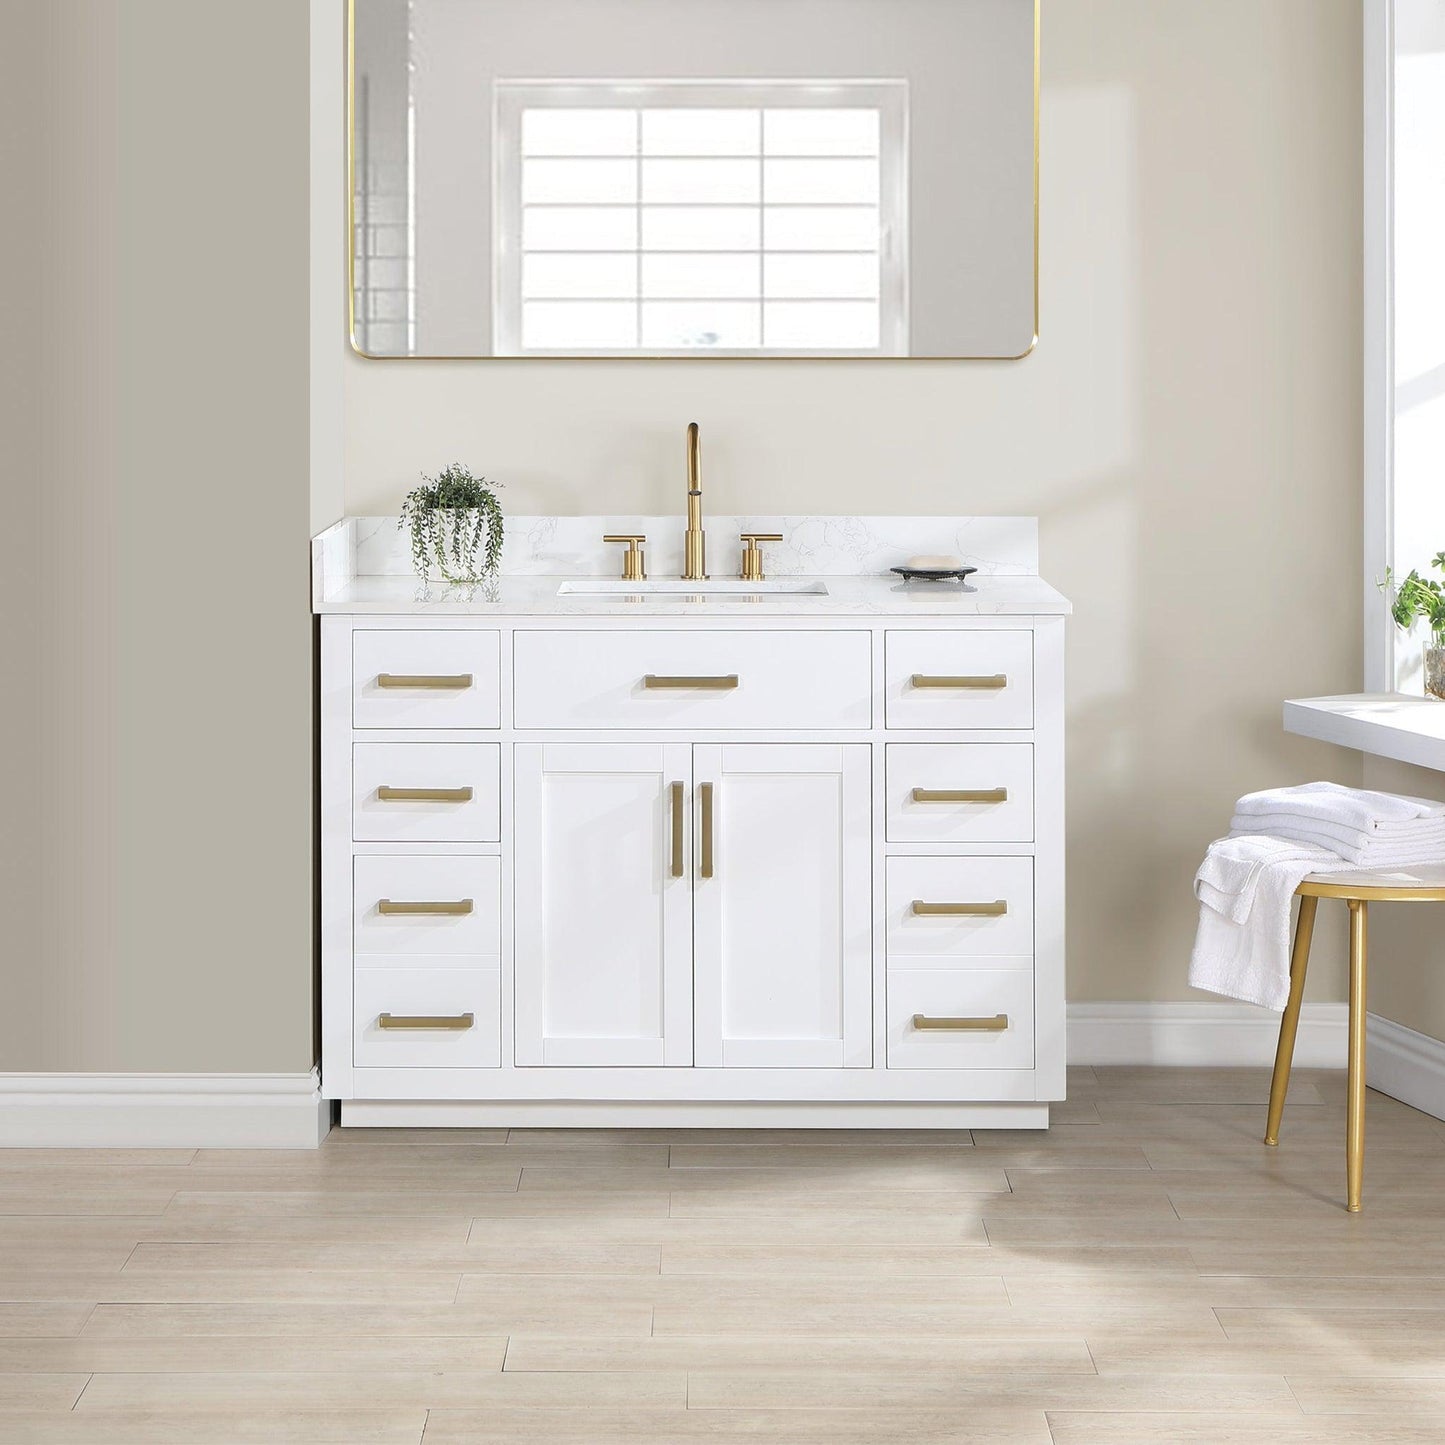 Altair Gavino 48" White Freestanding Single Bathroom Vanity Set With Grain White Composite Stone Top, Single Rectangular Undermount Ceramic Sink, Overflow, Sidesplash, and Backsplash